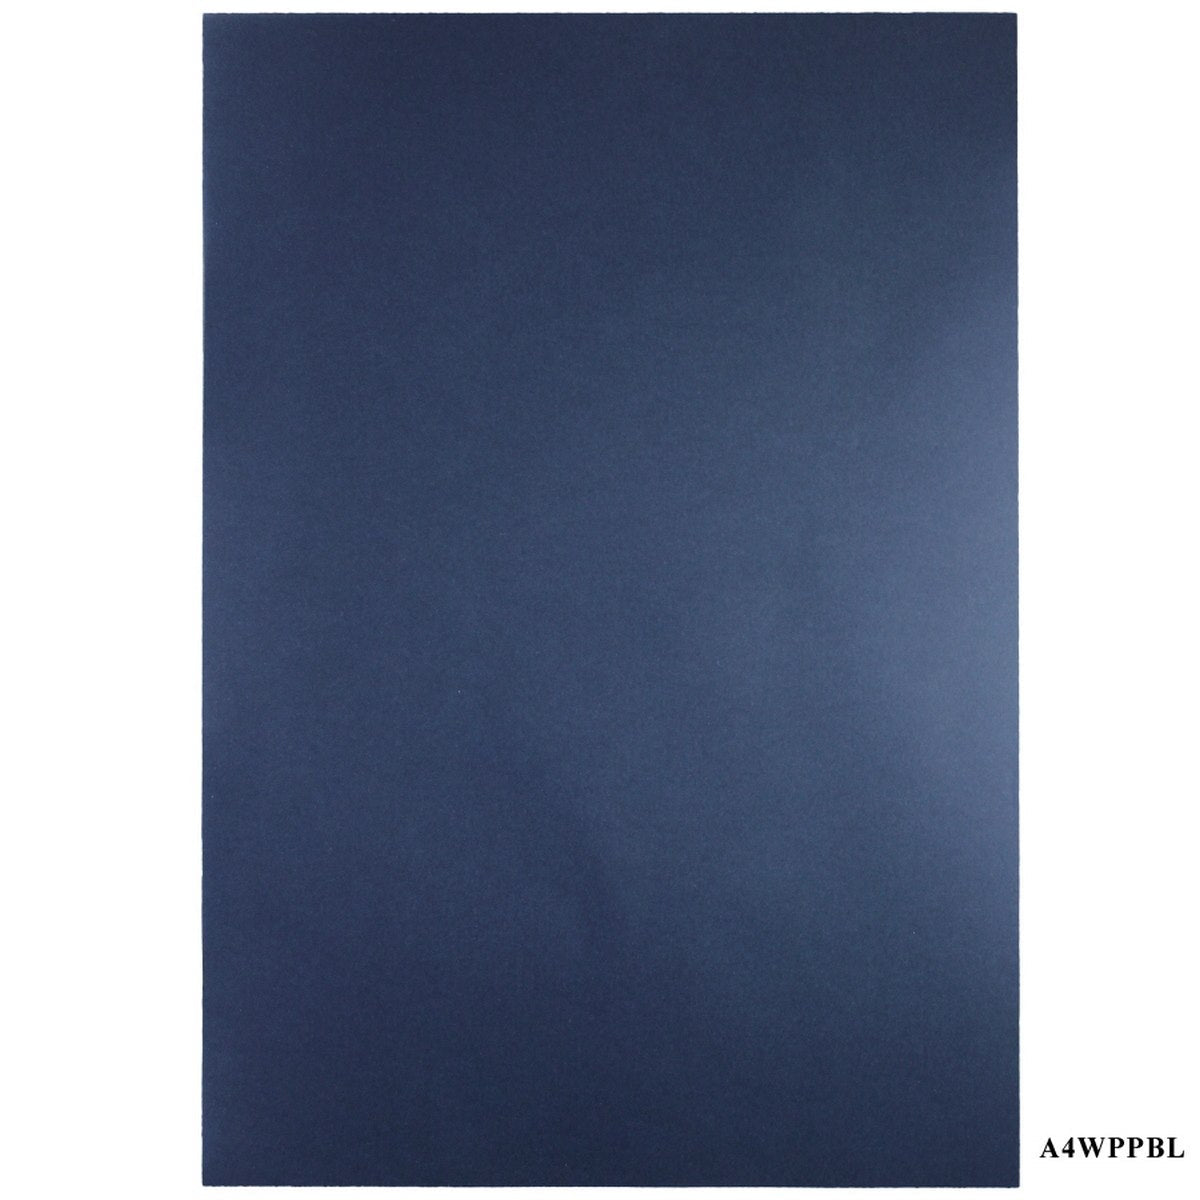 jags-mumbai Decorative Photo Frames Wellam Paper Plain A4 Blue 120gsm (Pack of 5)